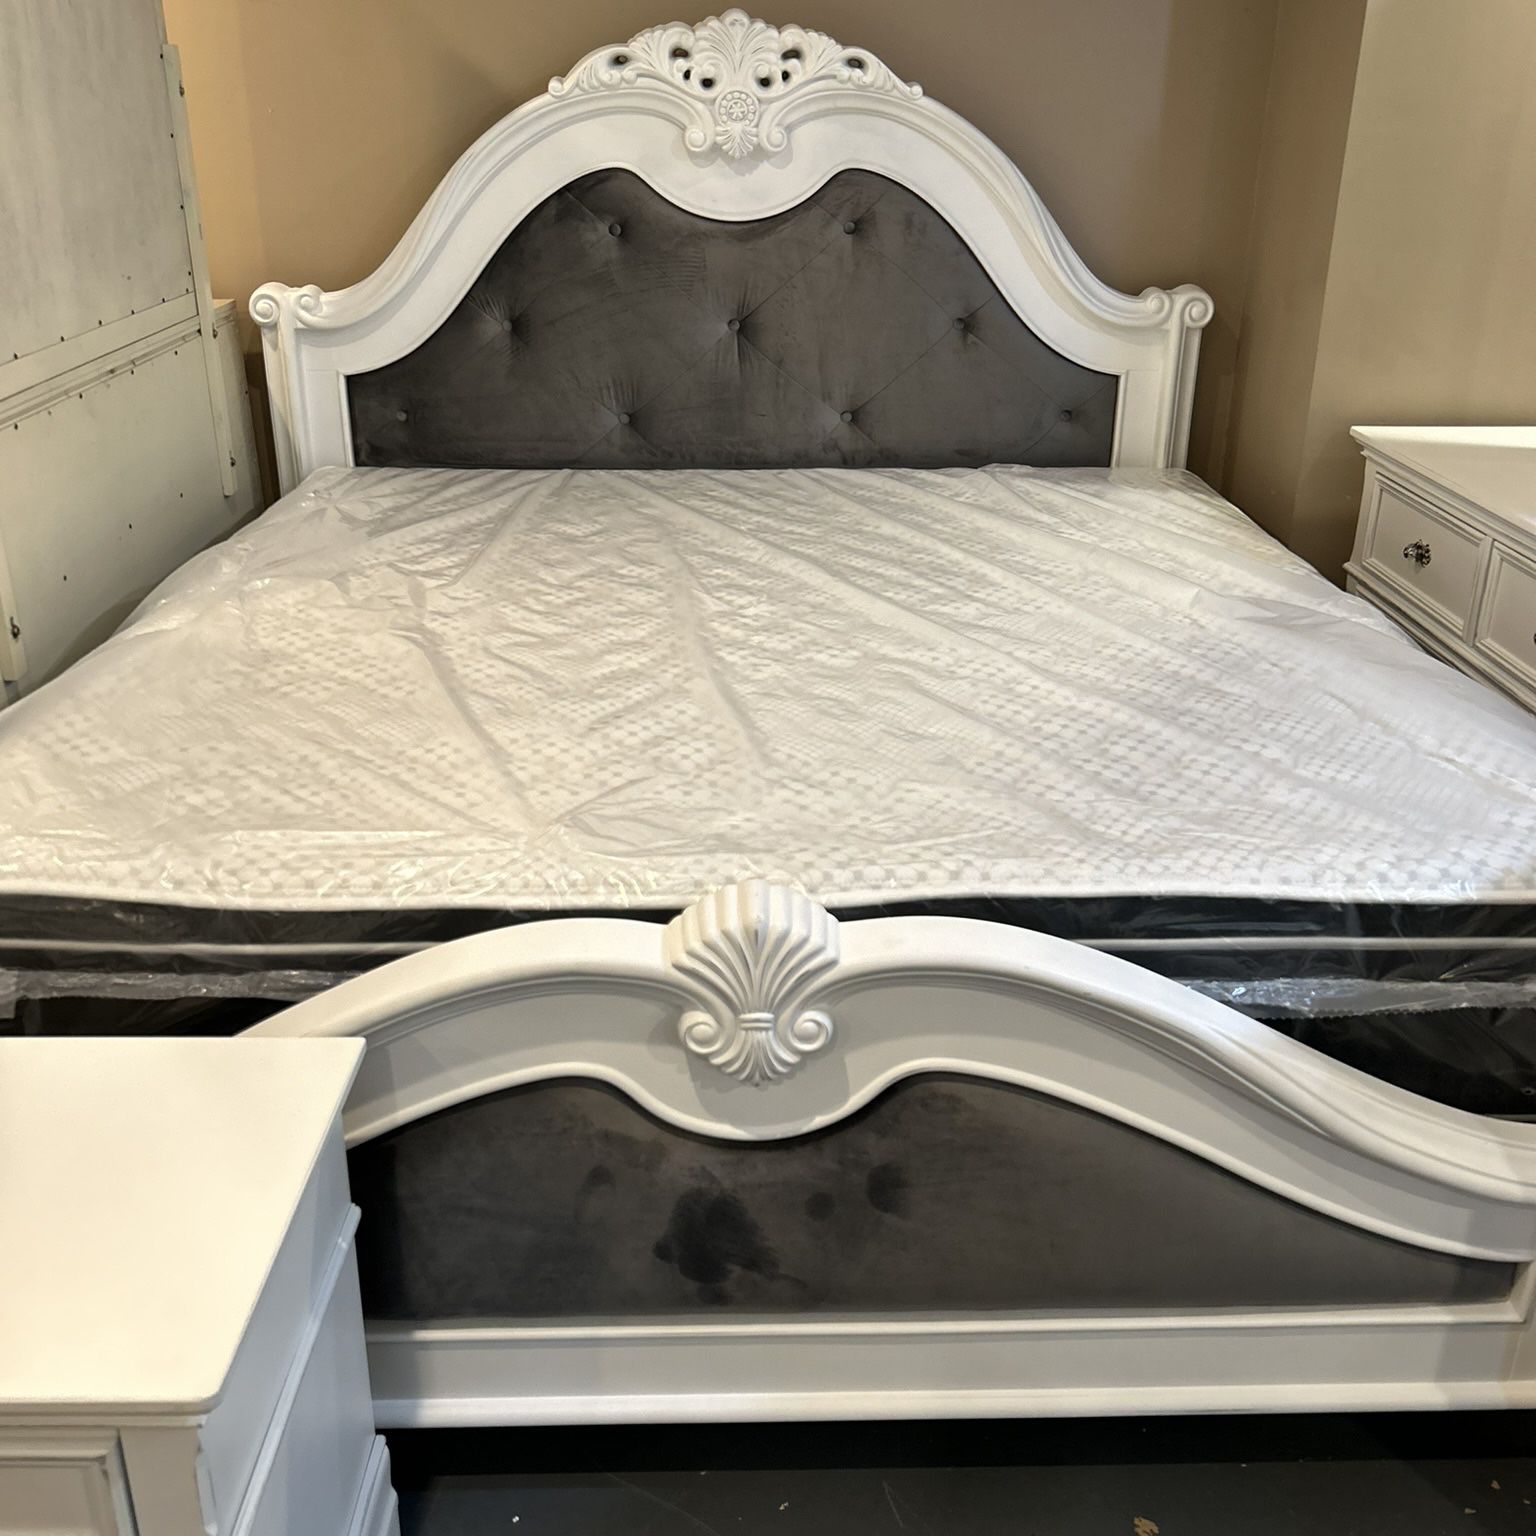 New King Bed Frame 